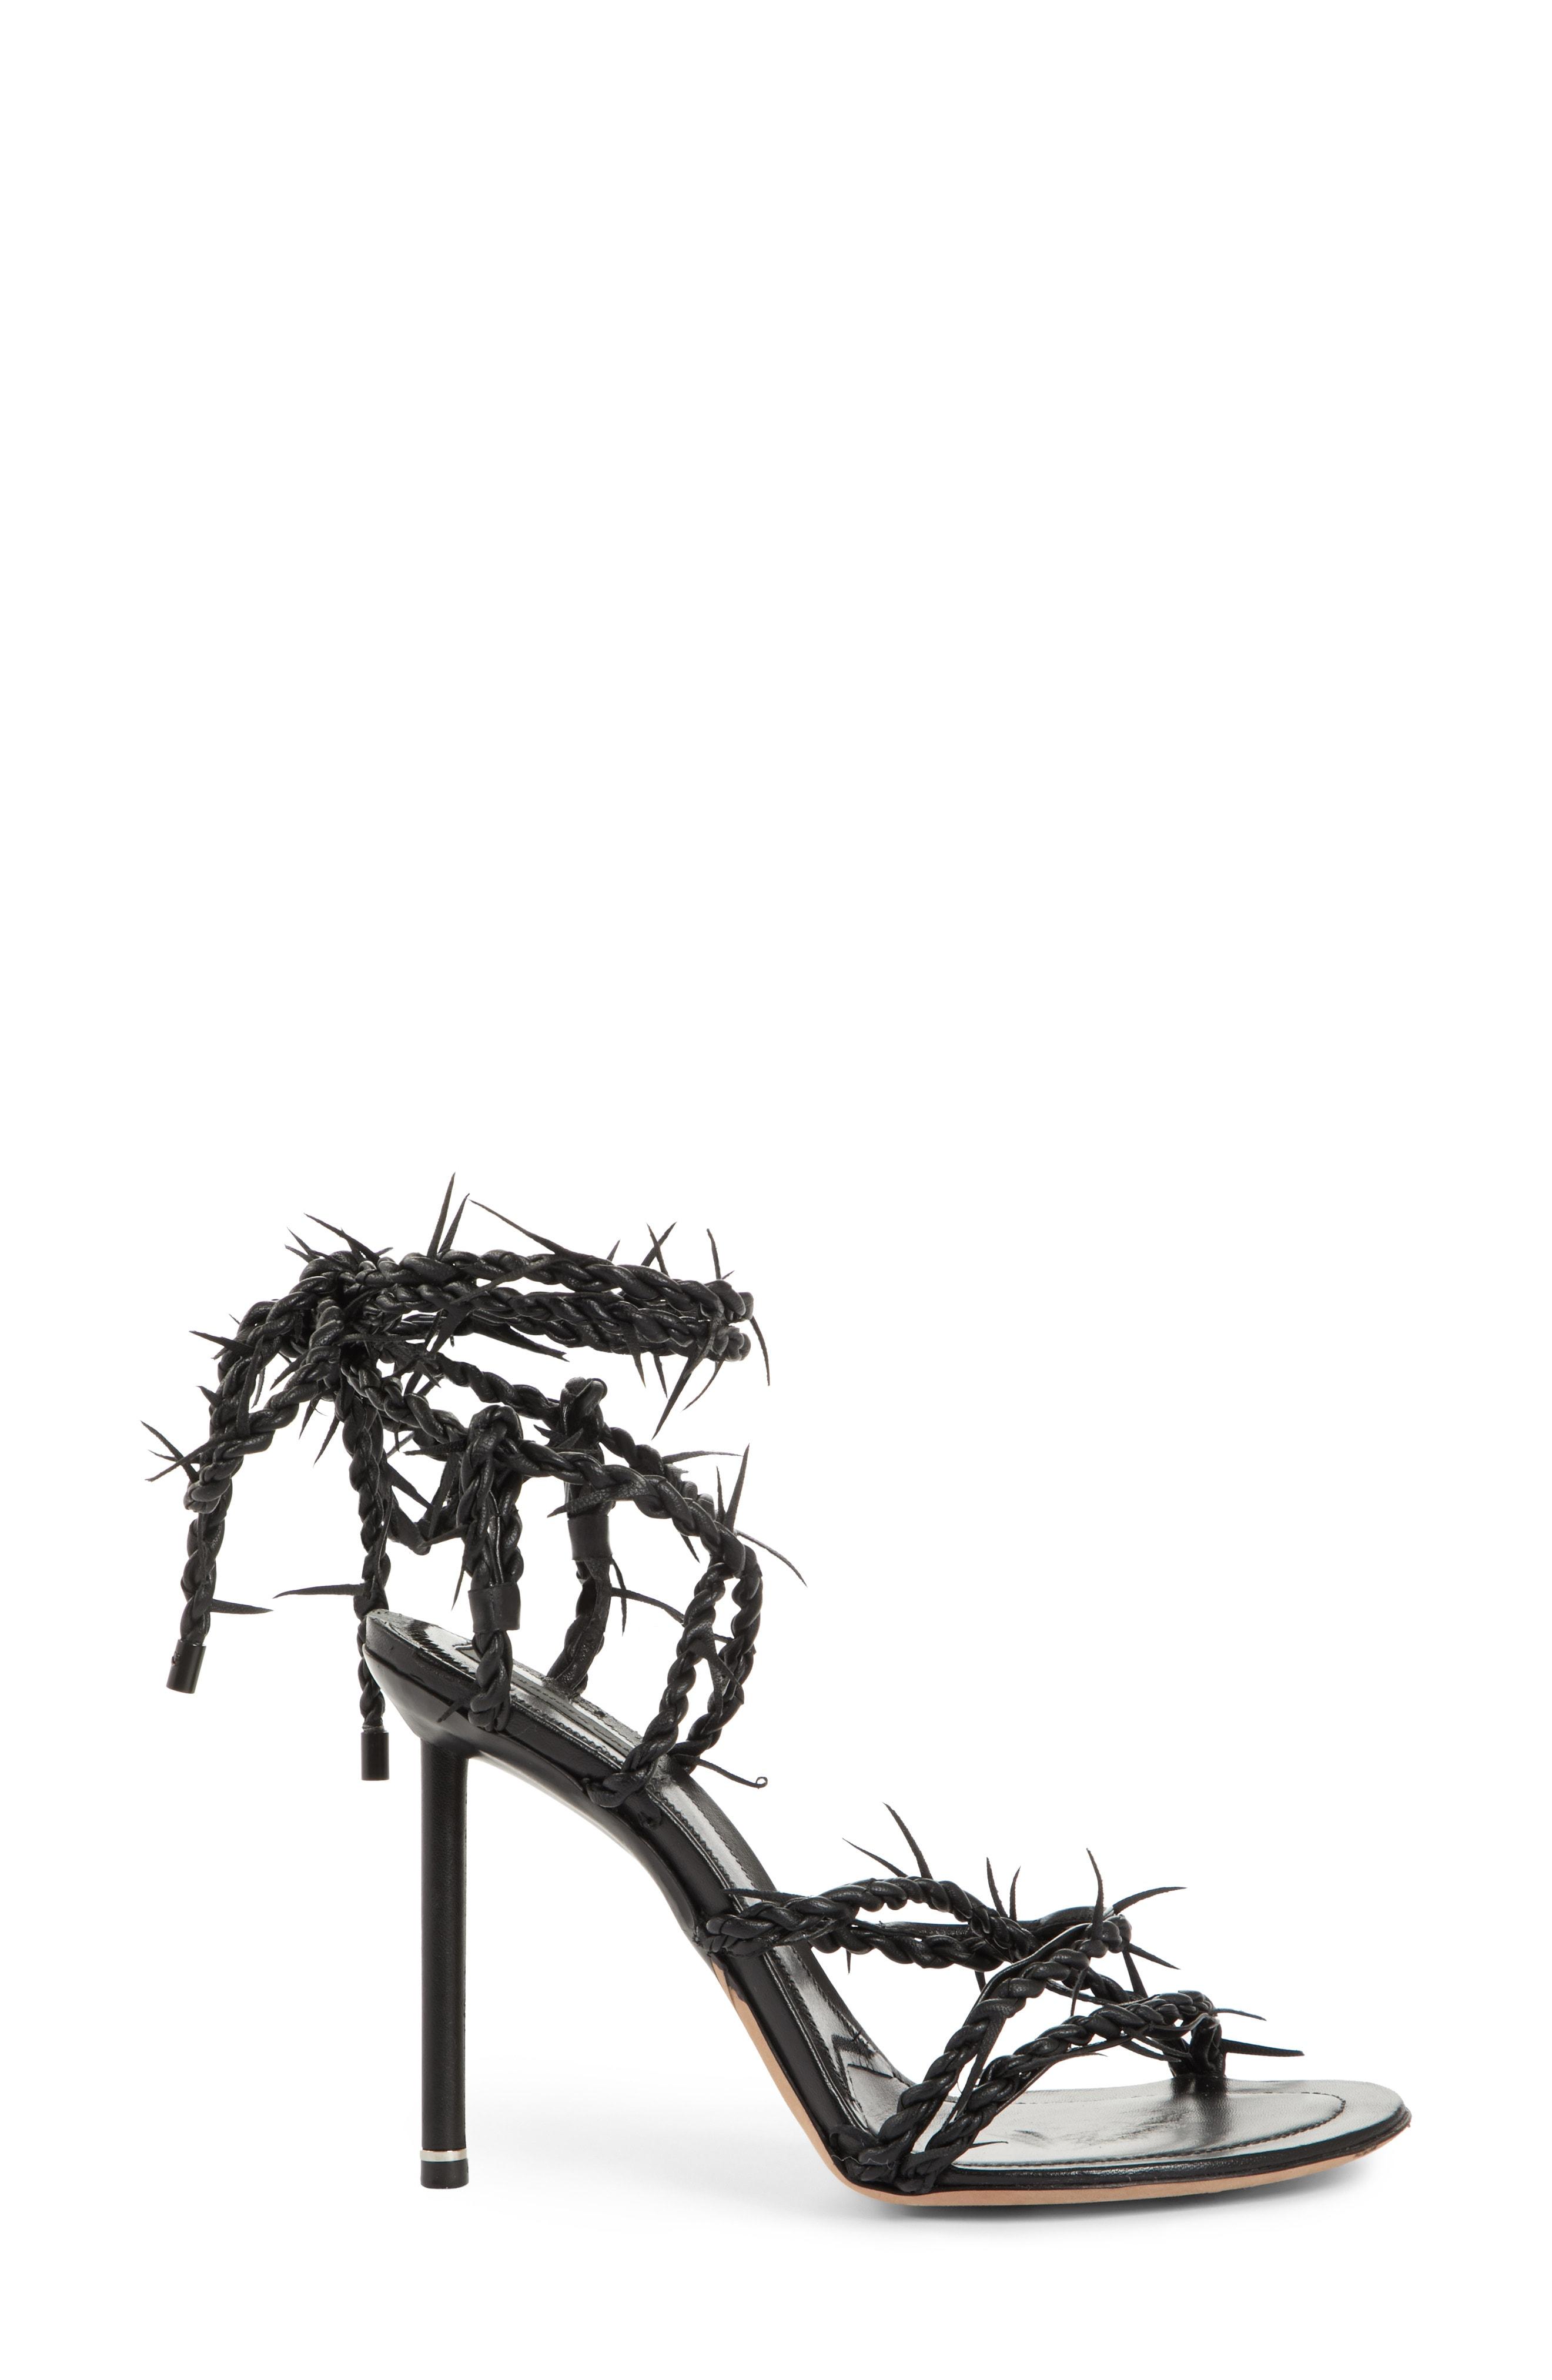 alexander wang barb wire heels